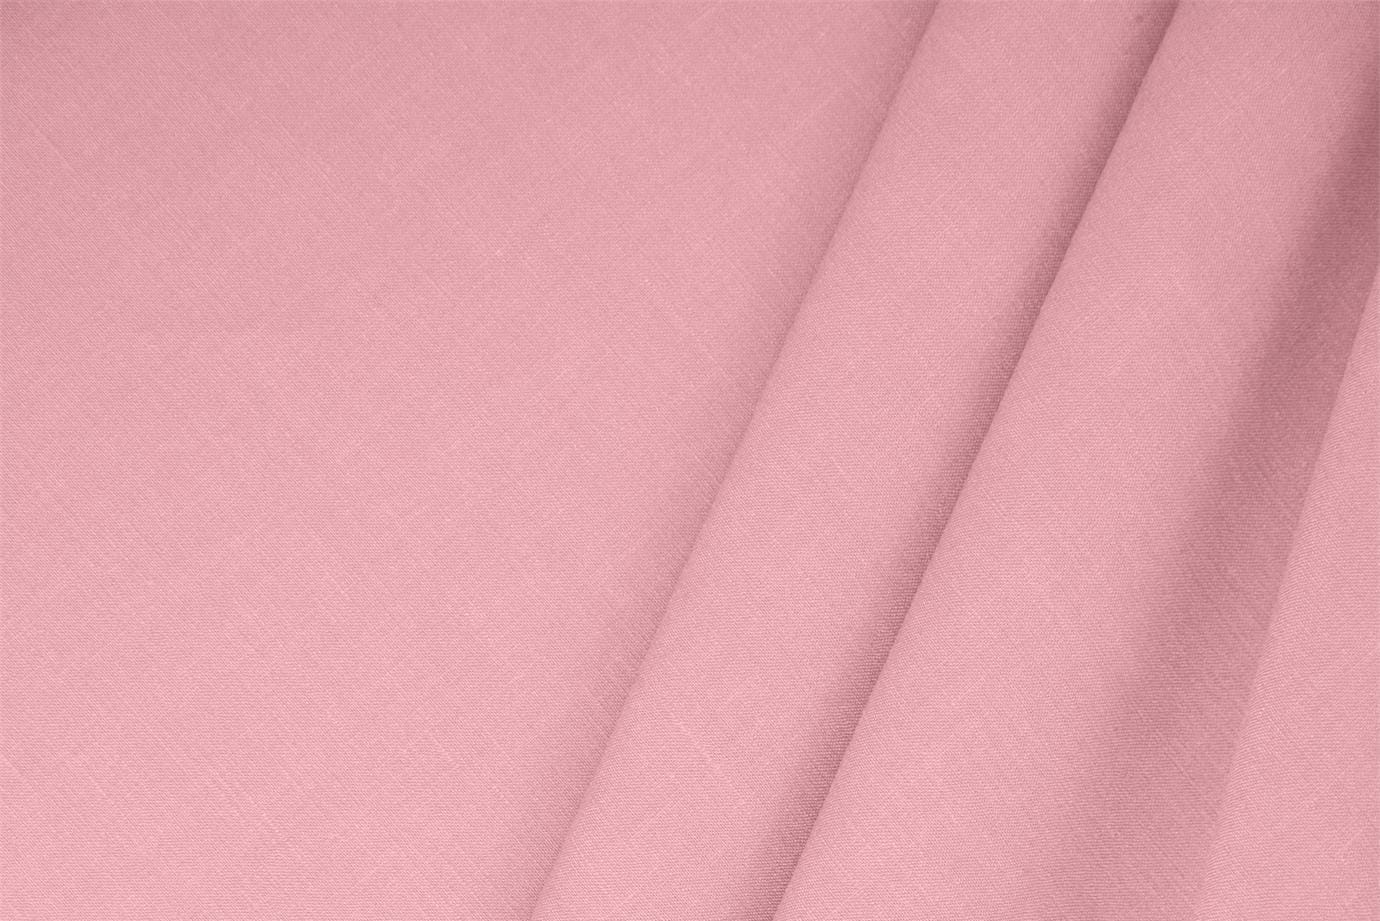 Baby Pink Linen, Stretch, Viscose Linen Blend fabric for dressmaking